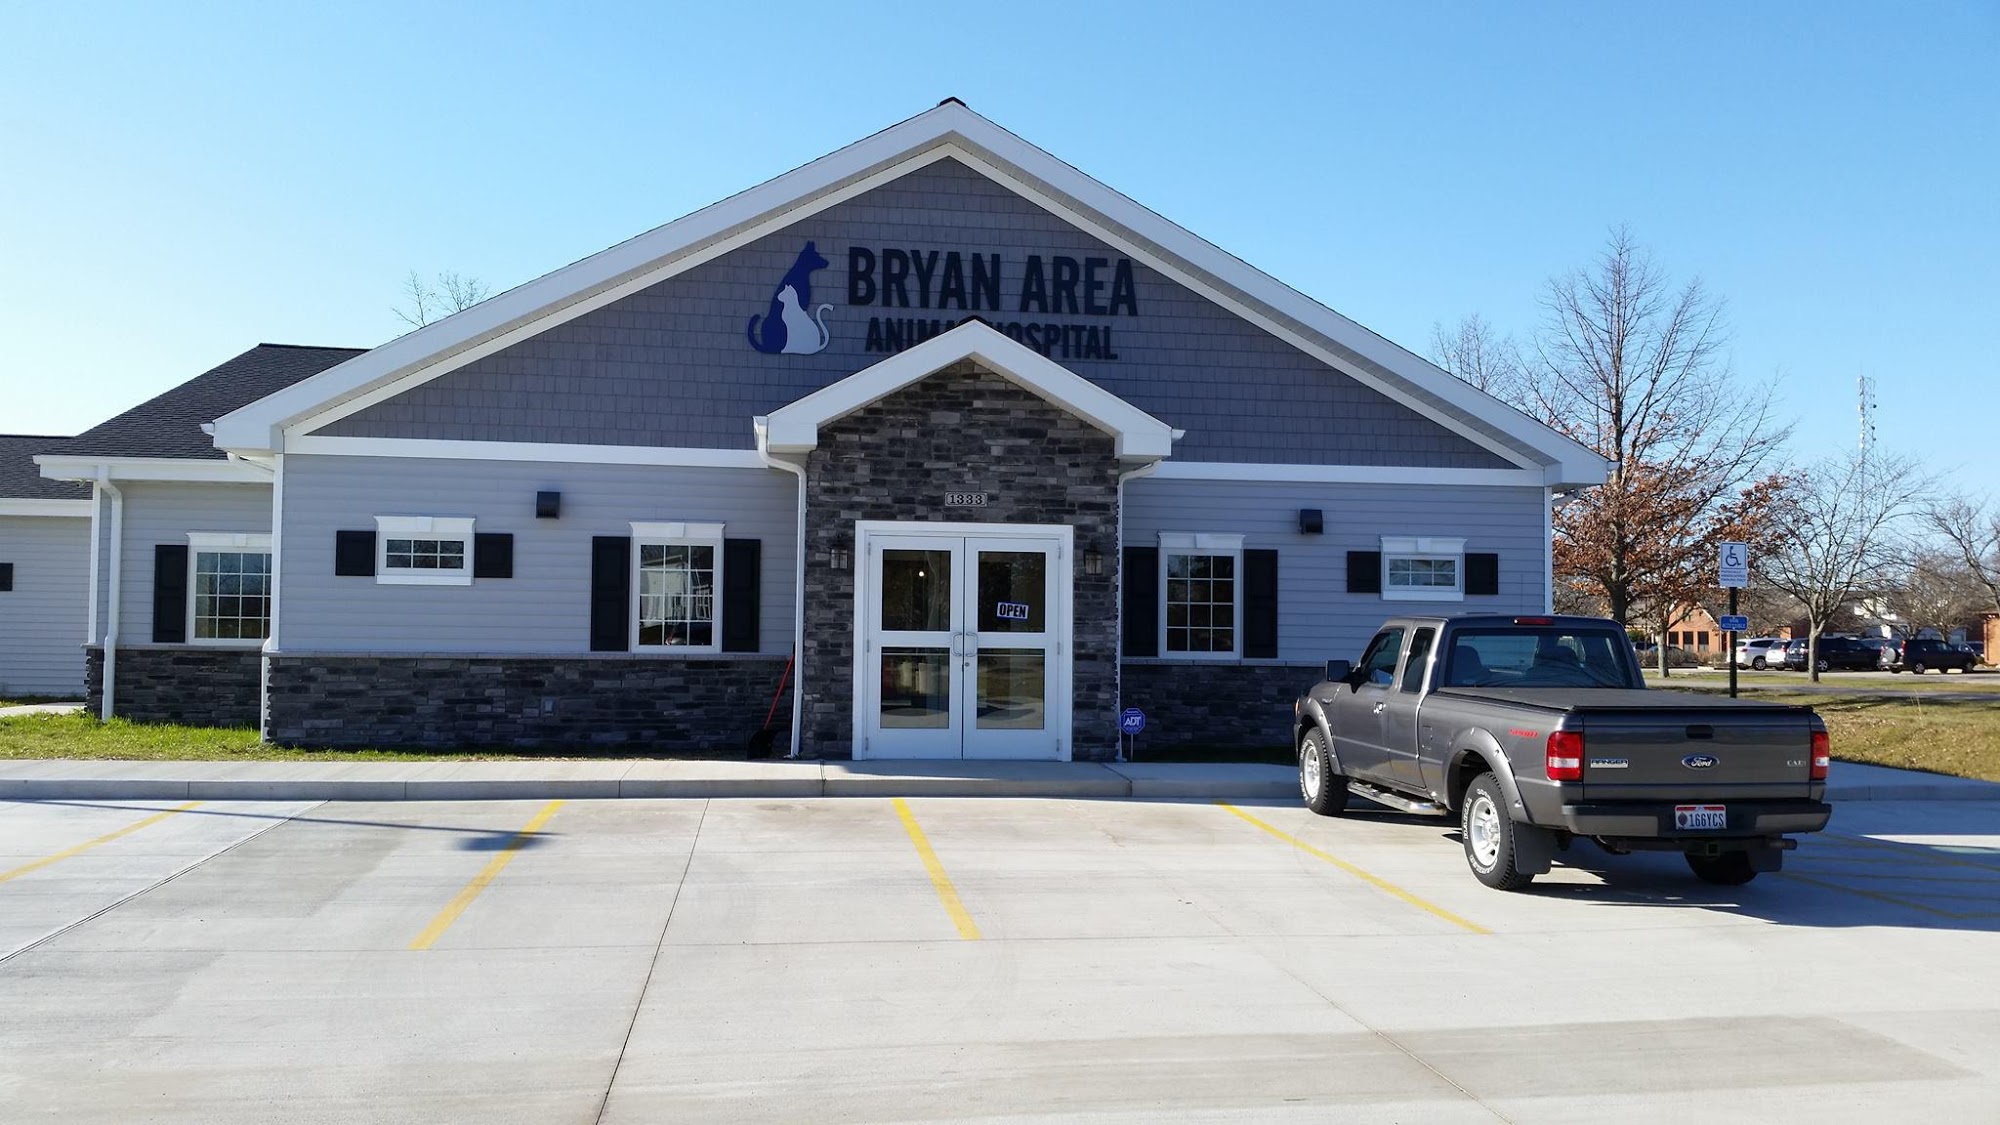 Bryan Area Animal Hospital